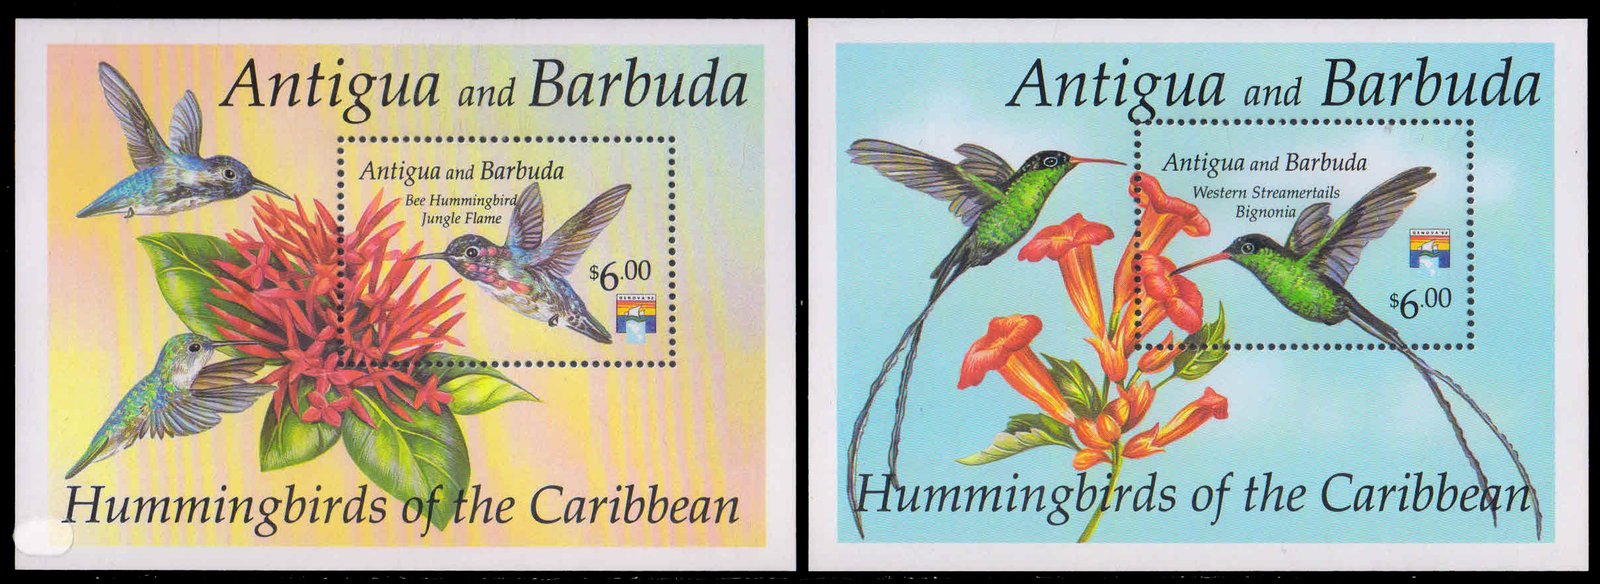 ANTIGUA & BARBUDA 1992-Flora & Fauna, Birds, Set of 2 Miniature Sheets, MNH, Set of 2 Sheets, Cat £ 10-